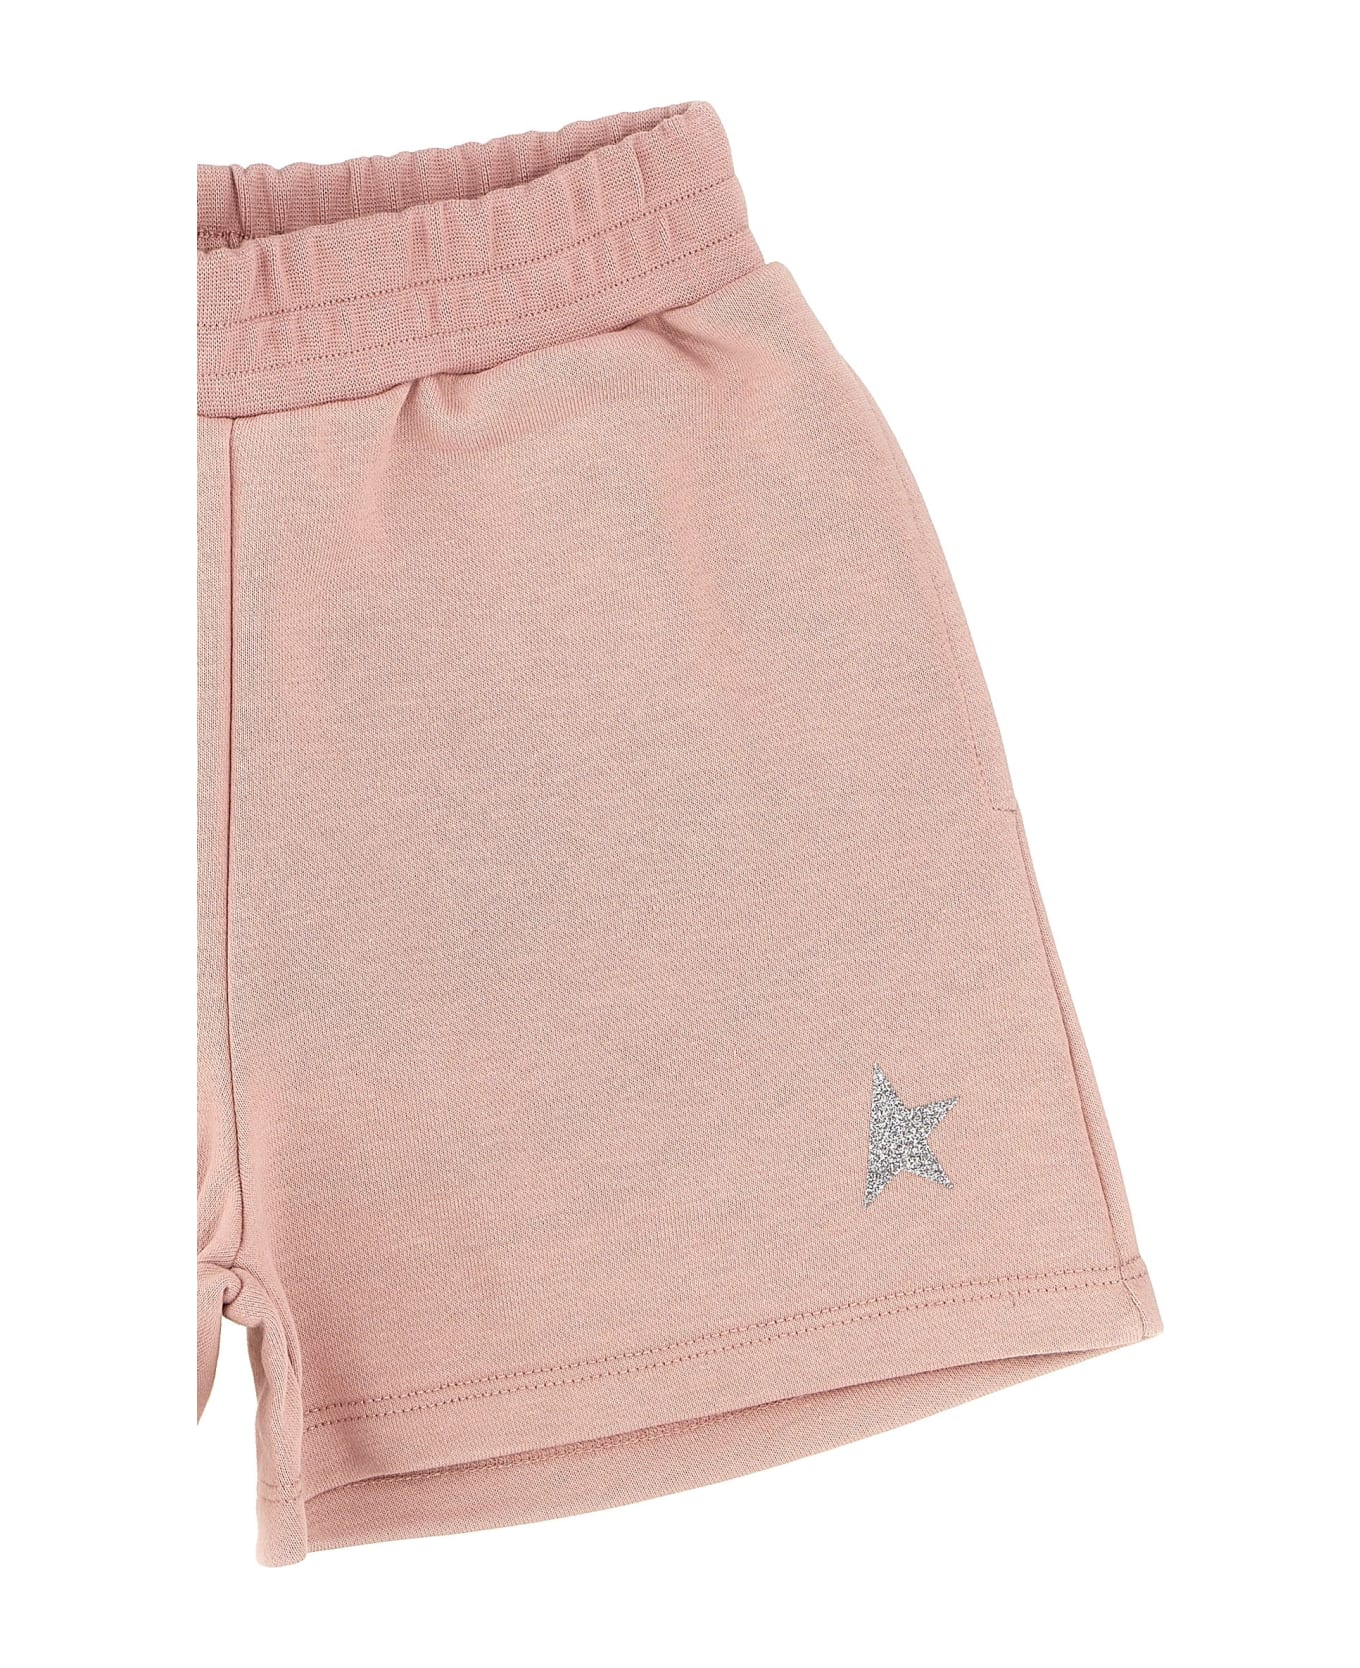 Golden Goose 'star' Bermuda Shorts - Pink